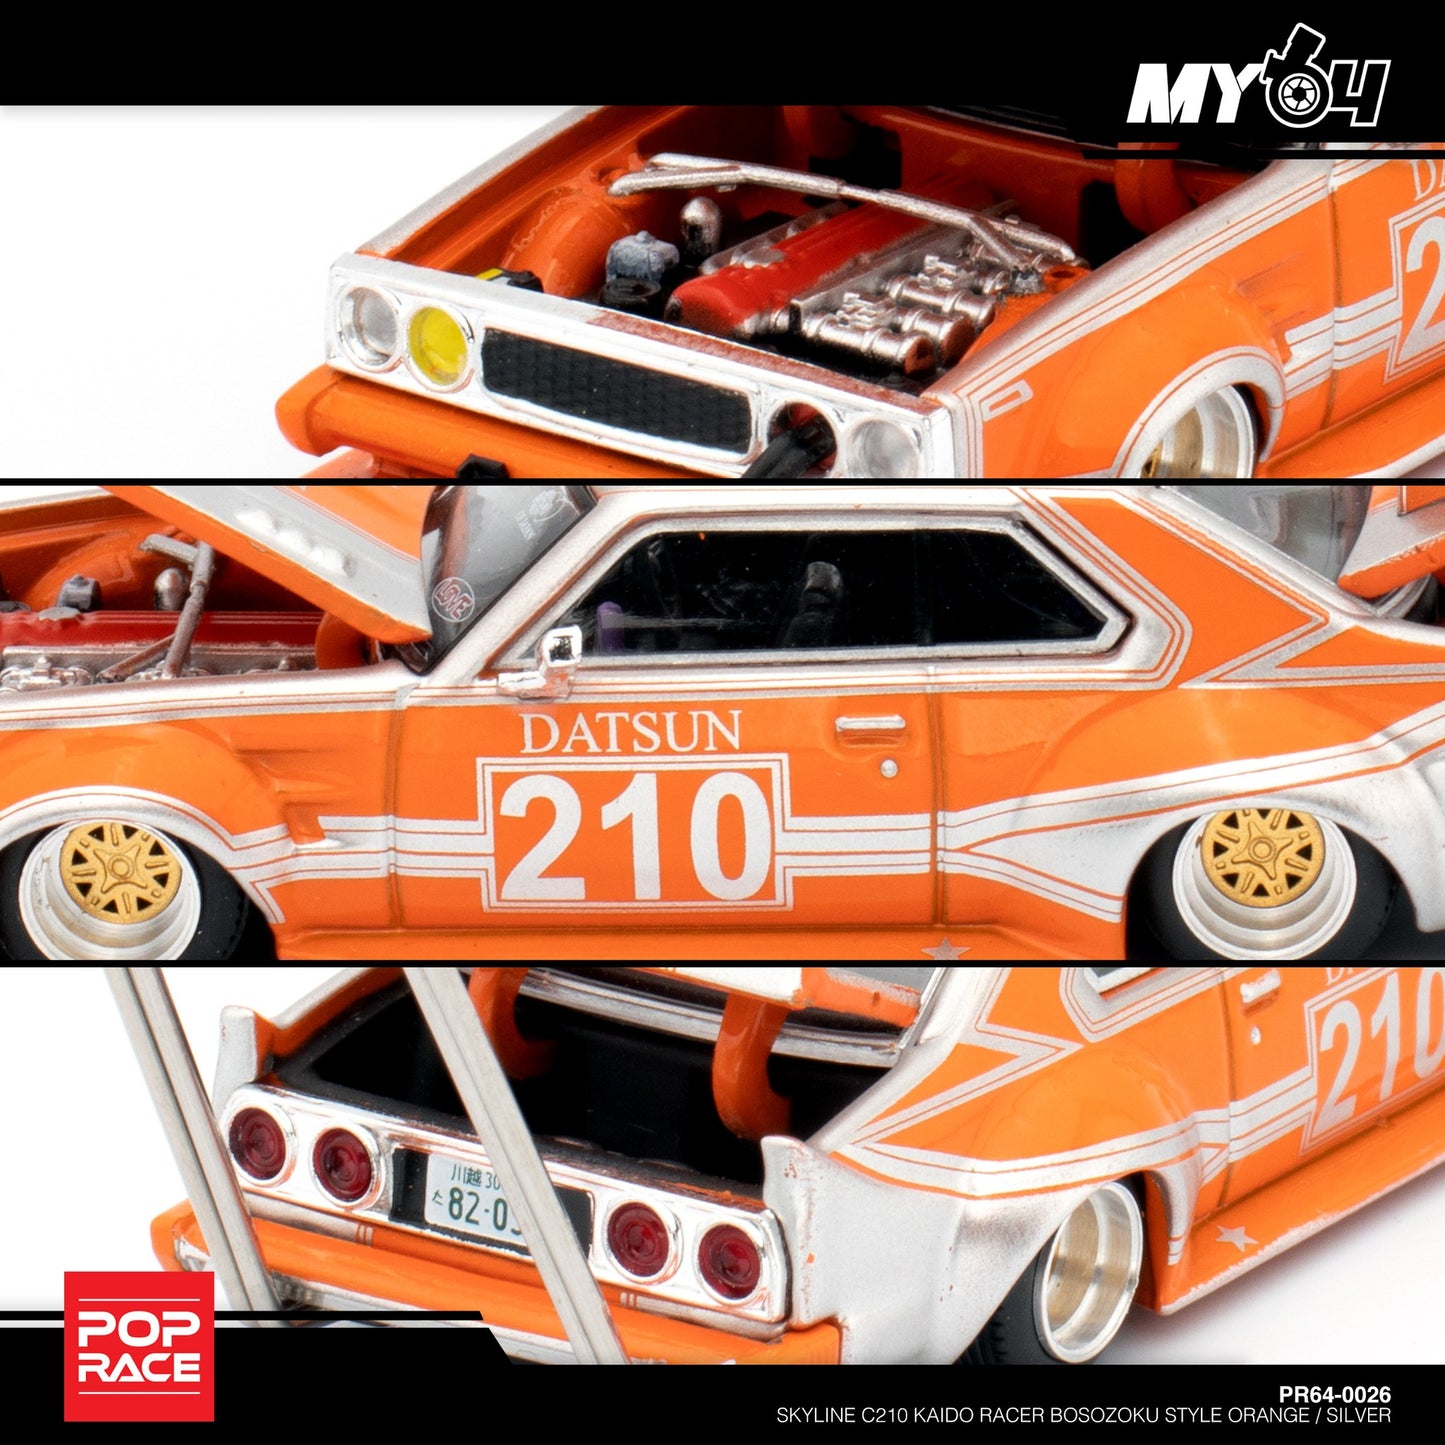 [Pop Race] Skyline C210 Kaido Racer Bosozoku Style - Orange/Silver